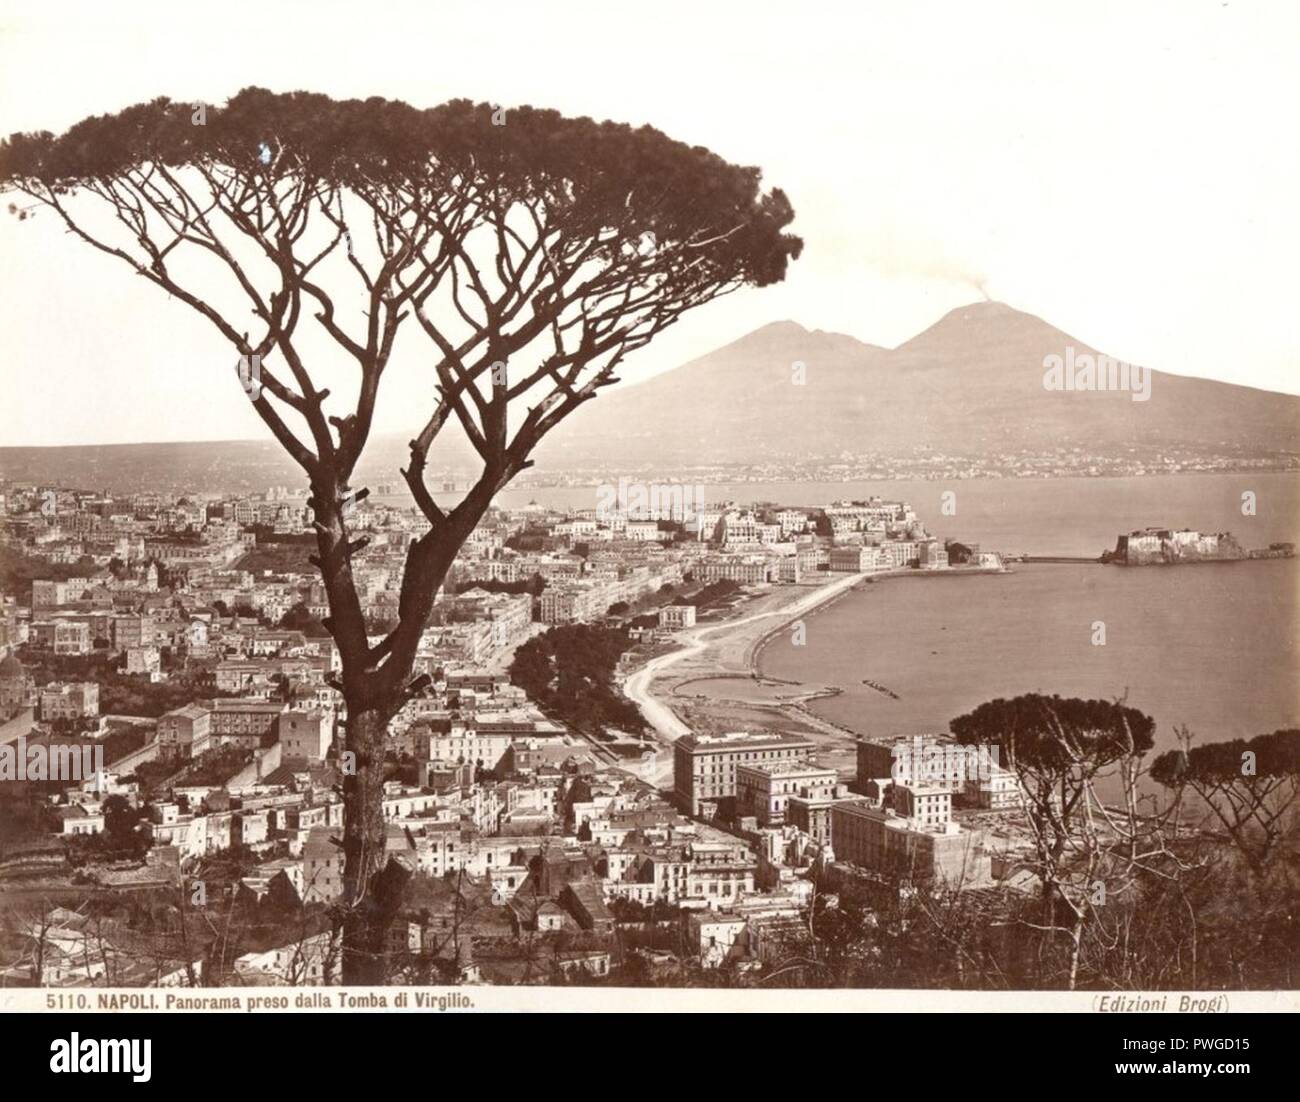 Brogi, Giacomo (1822-1881) - n. 5110 - Napoli - Panorama preso dalla Tomba di Virgilio. Stock Photo